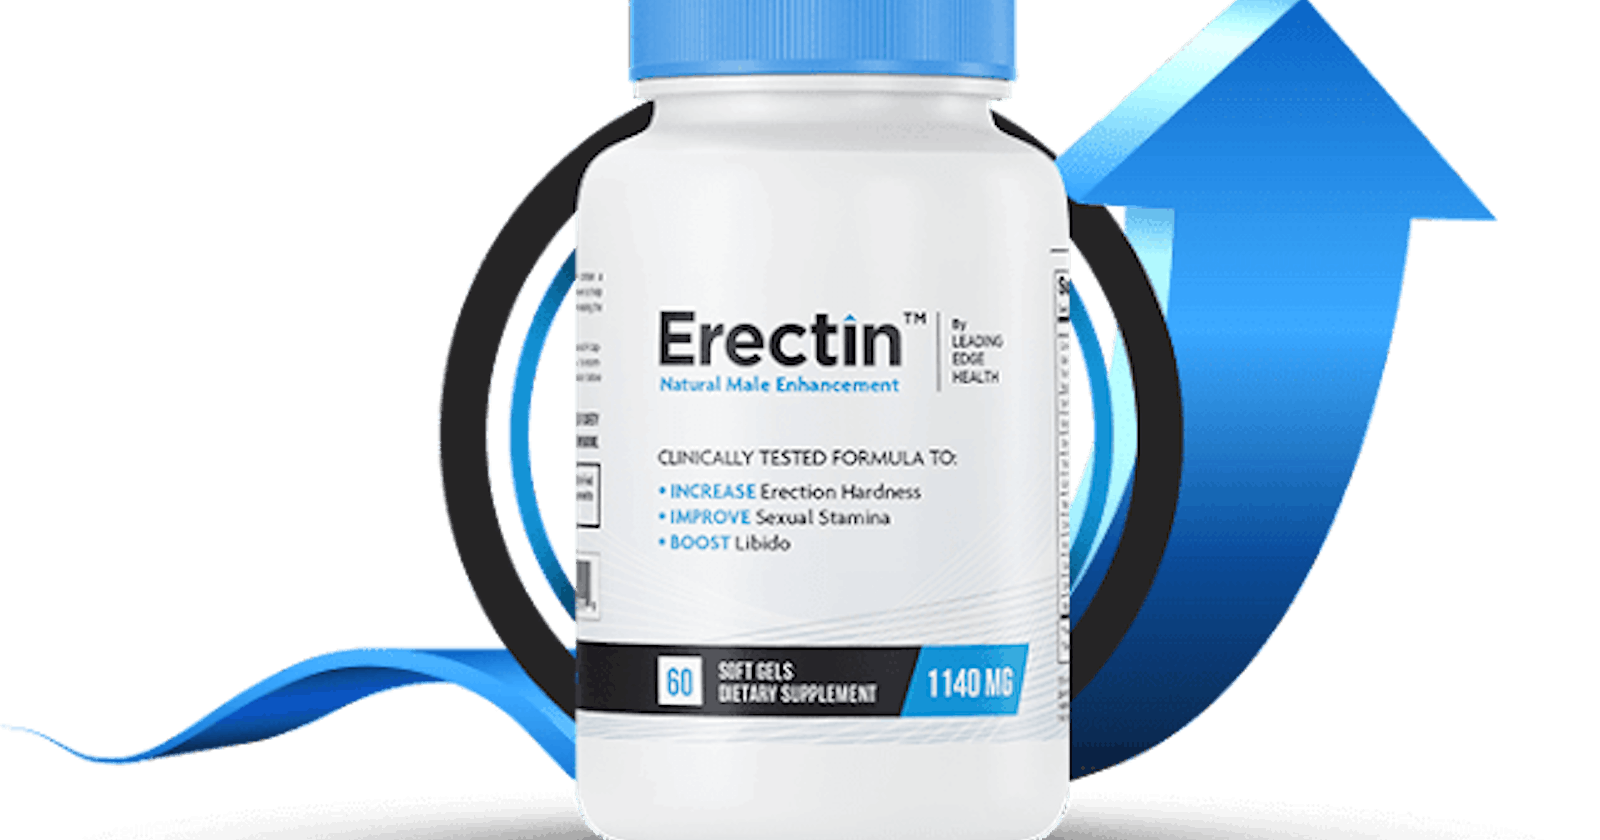 Erectin: Powerful All-New Male Enhancement Formula